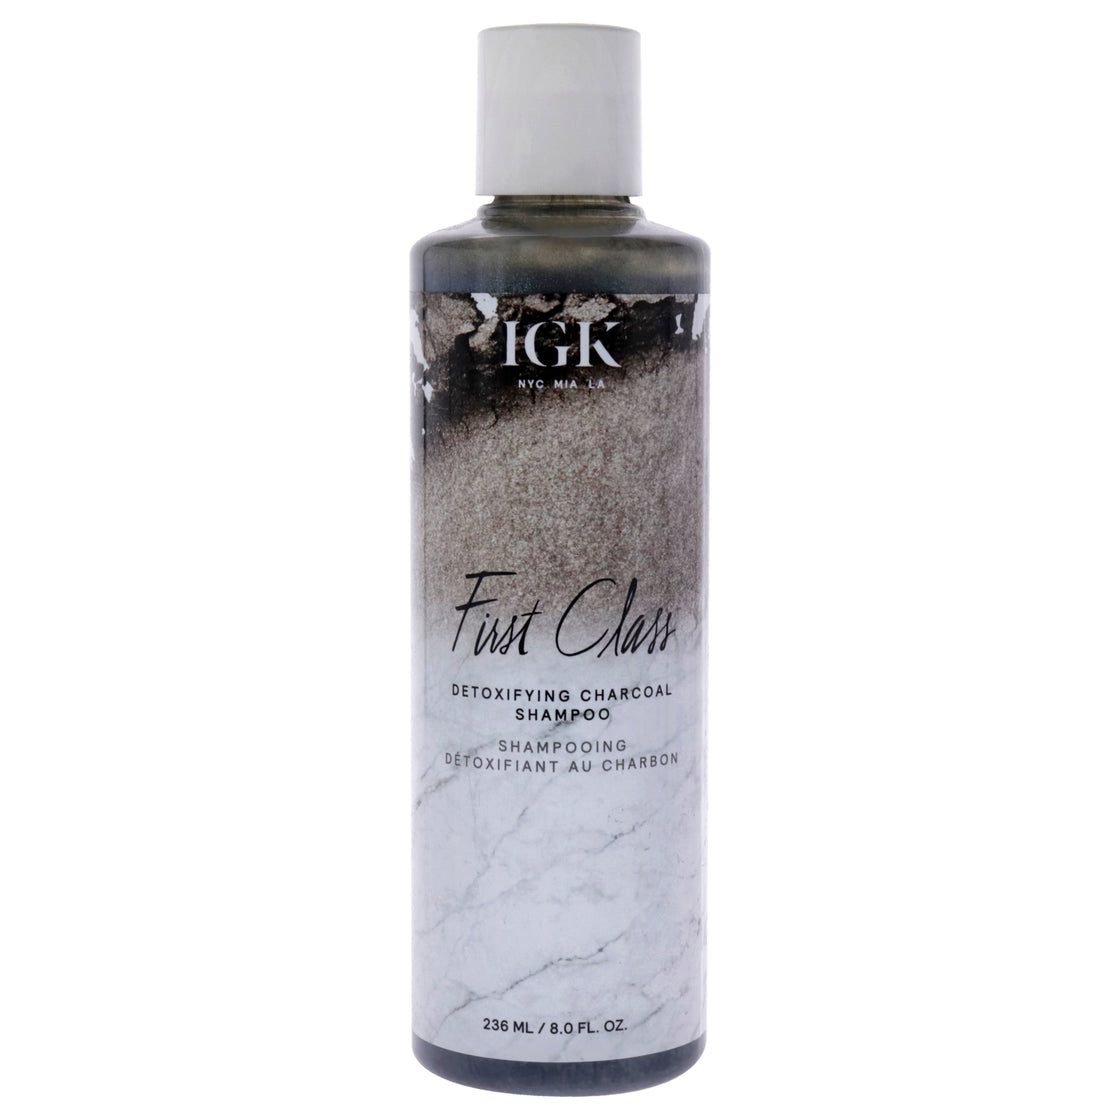 First Class Detoxifying Charcoal Shampoo by IGK for Unisex - 8 oz Shampoo